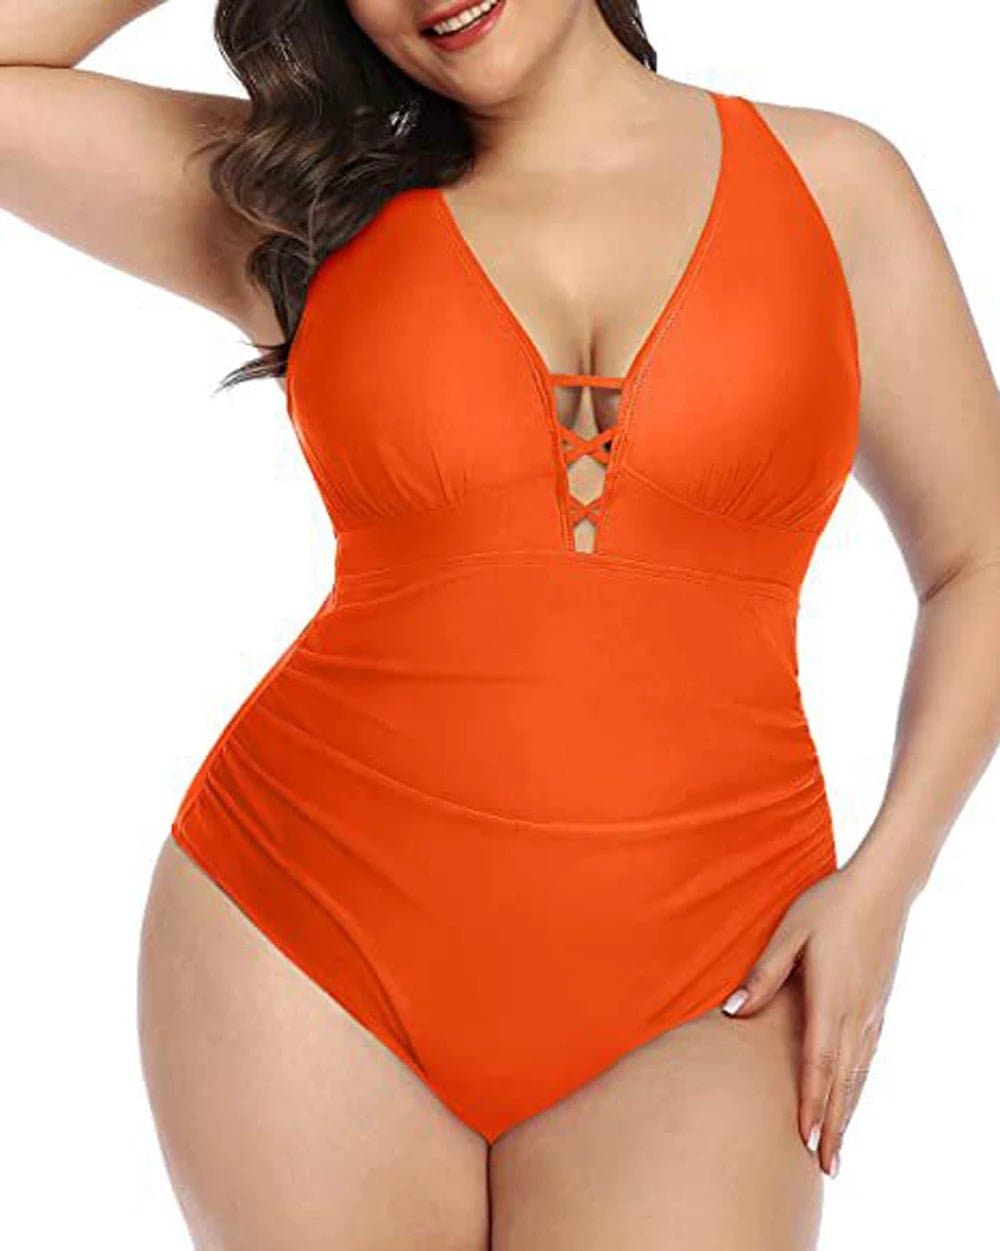 One-Piece Bathing Suits - Polyester/Spandex - Fits True to Size - Women's Swimwear - Wandering Woman